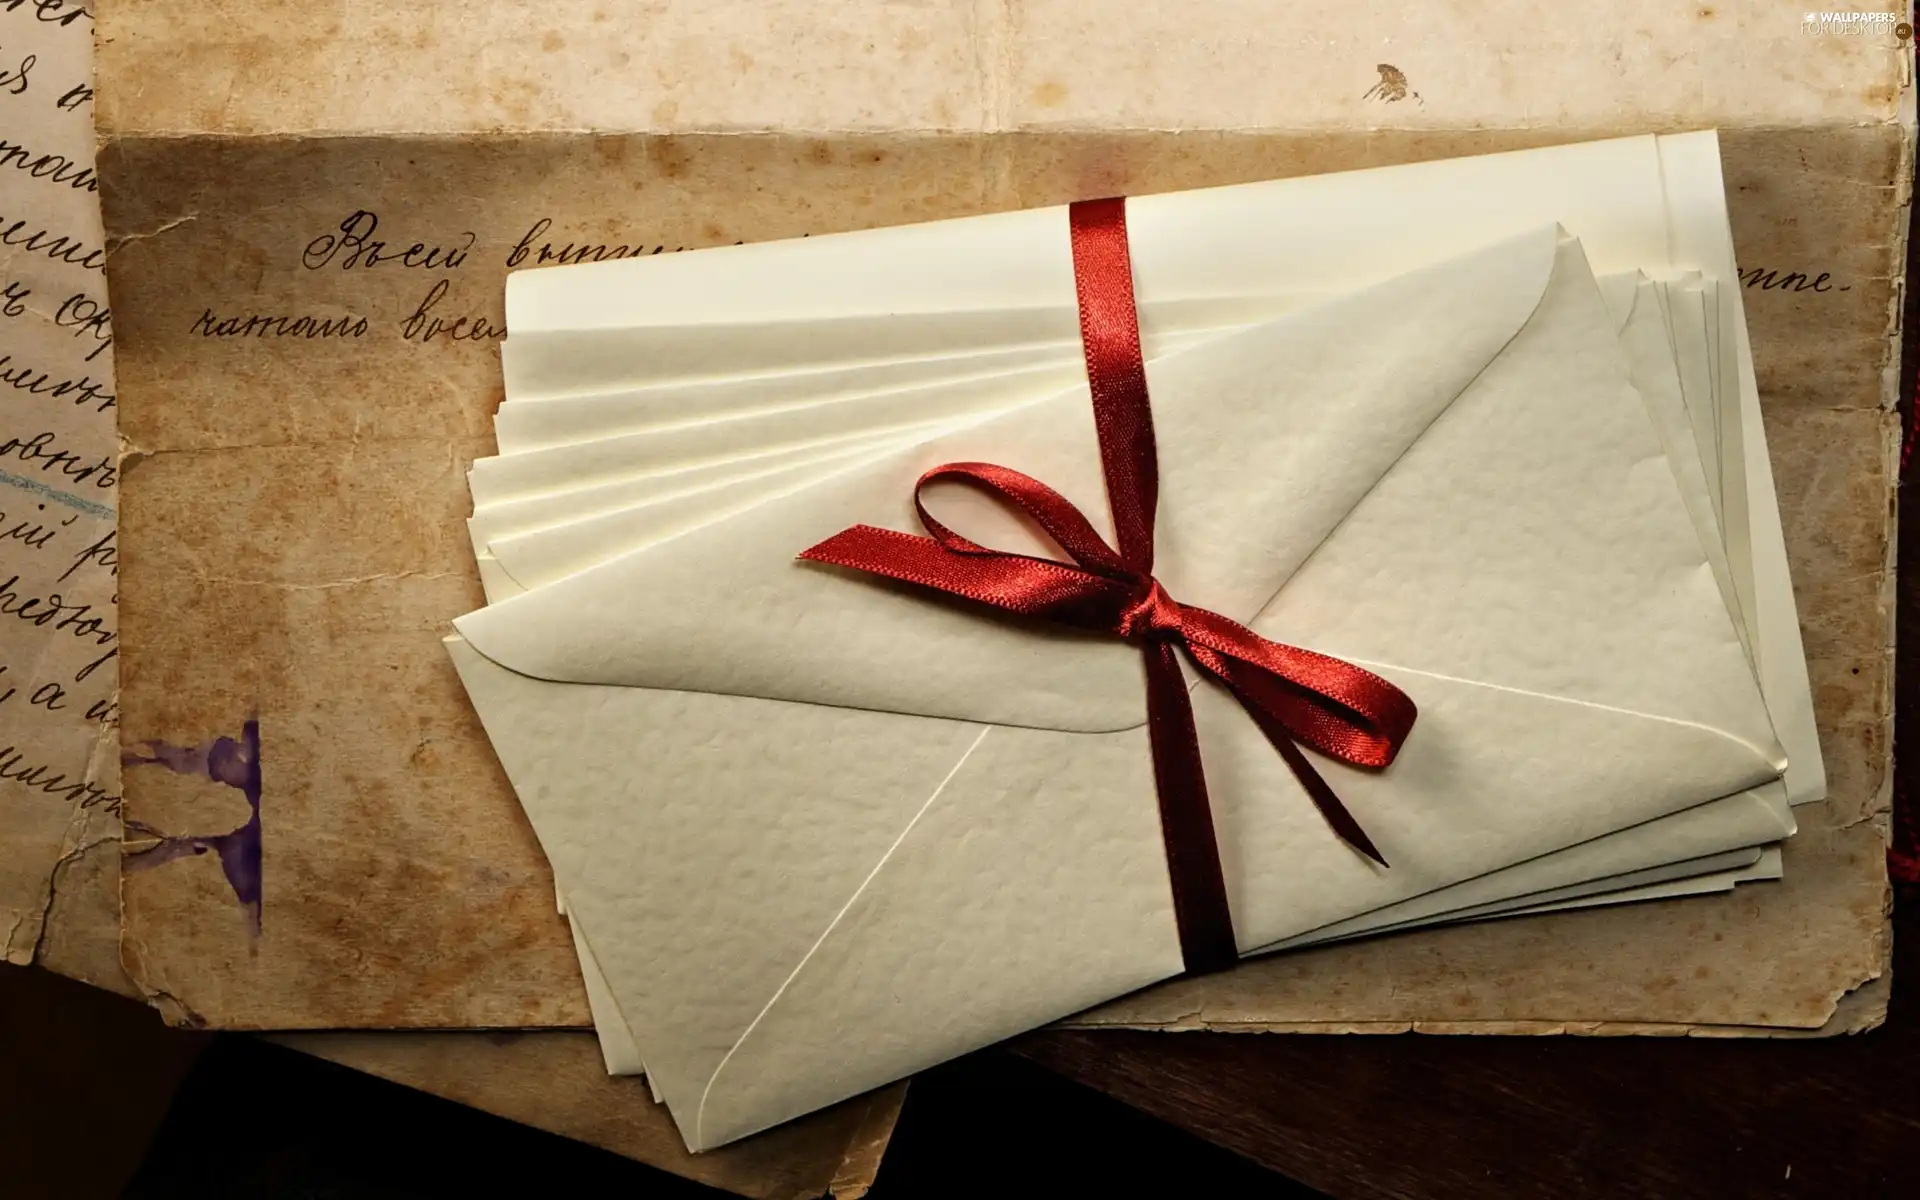 Envelopes, ribbon